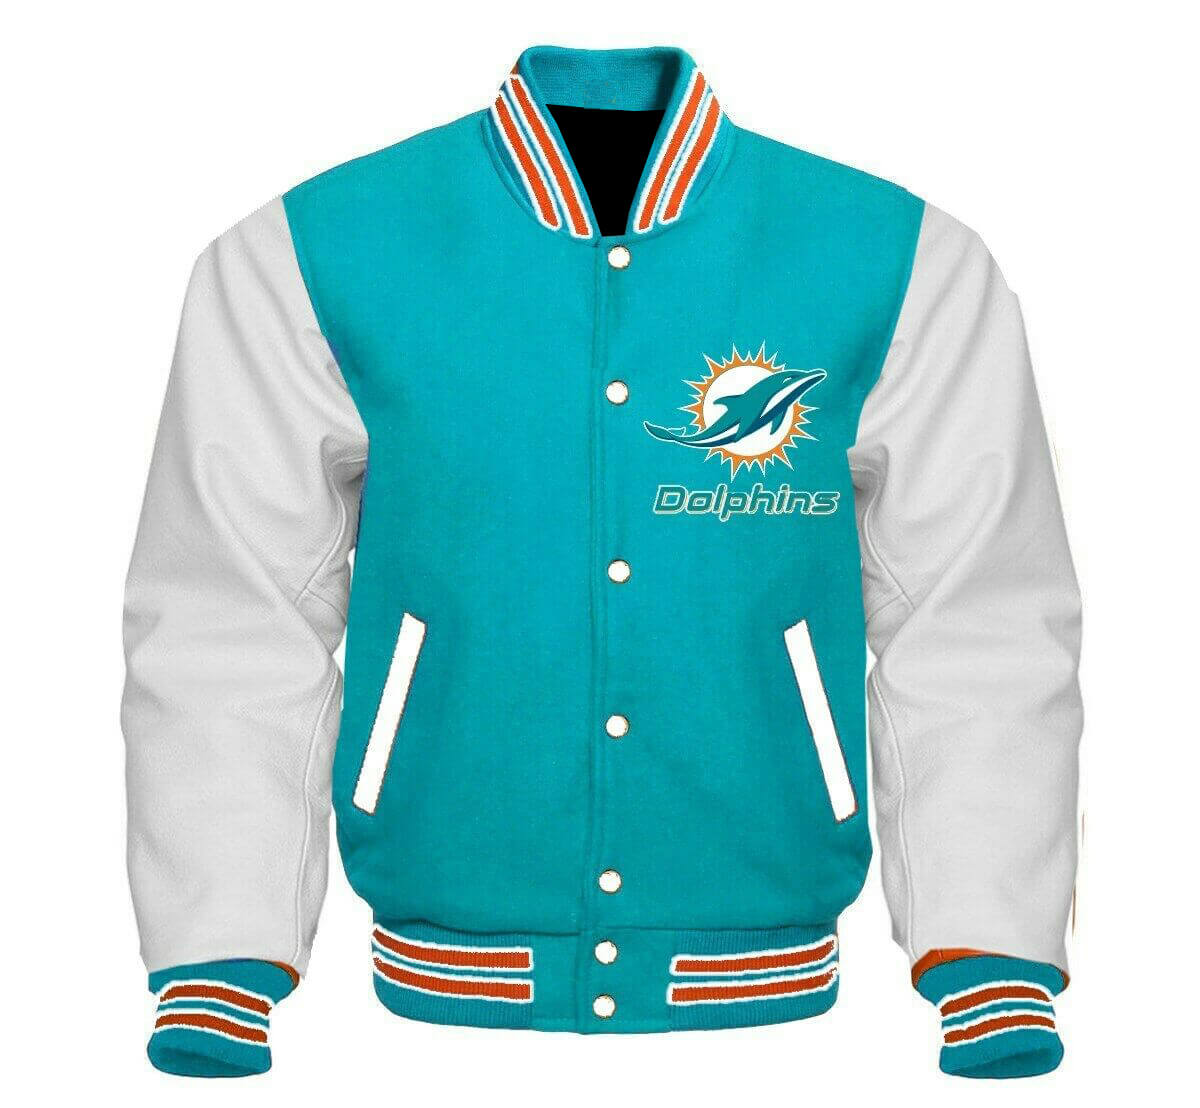 Vintage NFL Miami Dolphins Varsity Jacket - Maker of Jacket